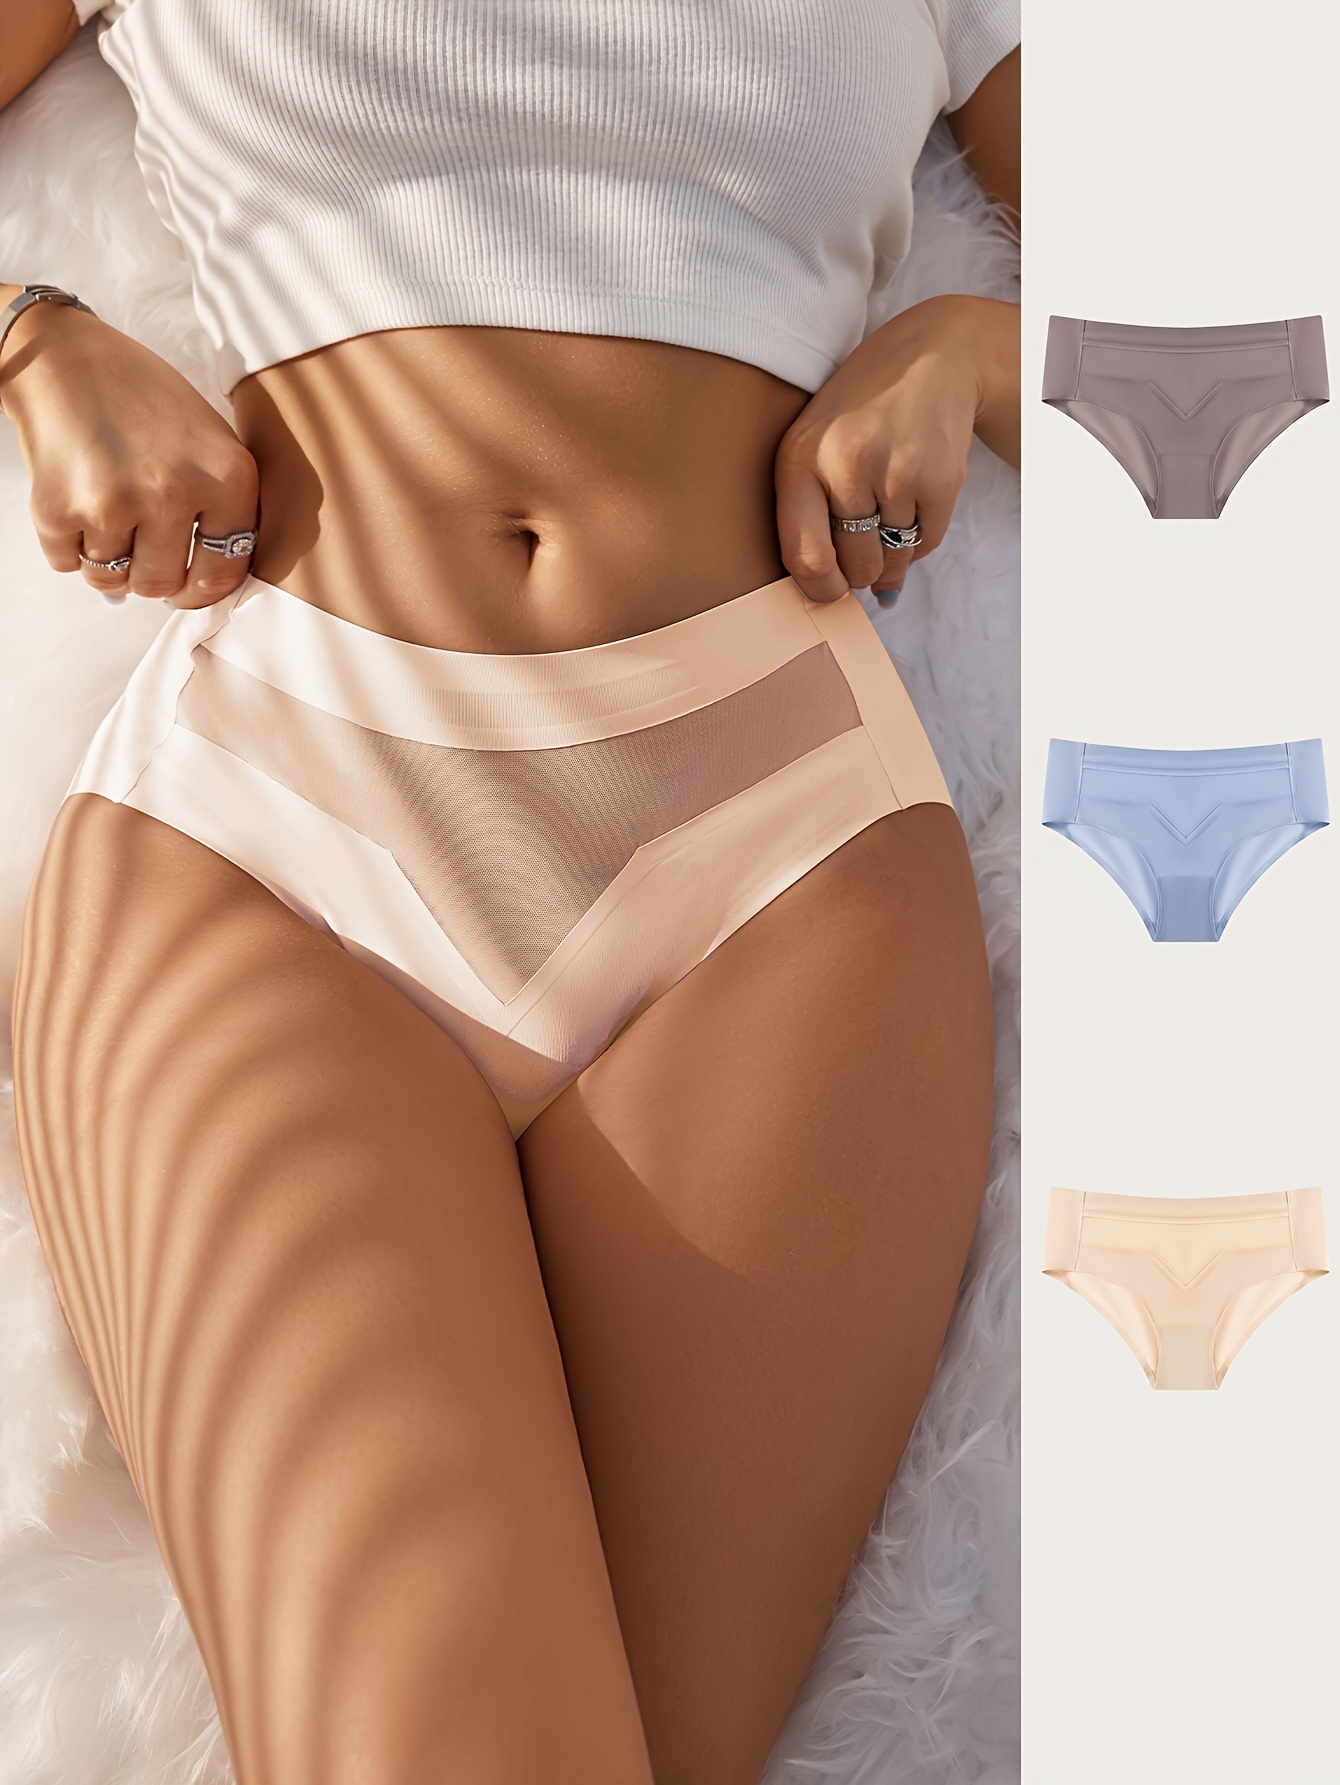 3PCS Women Sexy Briefs Thong Solid Mesh High Cut underwear Bikini knickers  S-XL